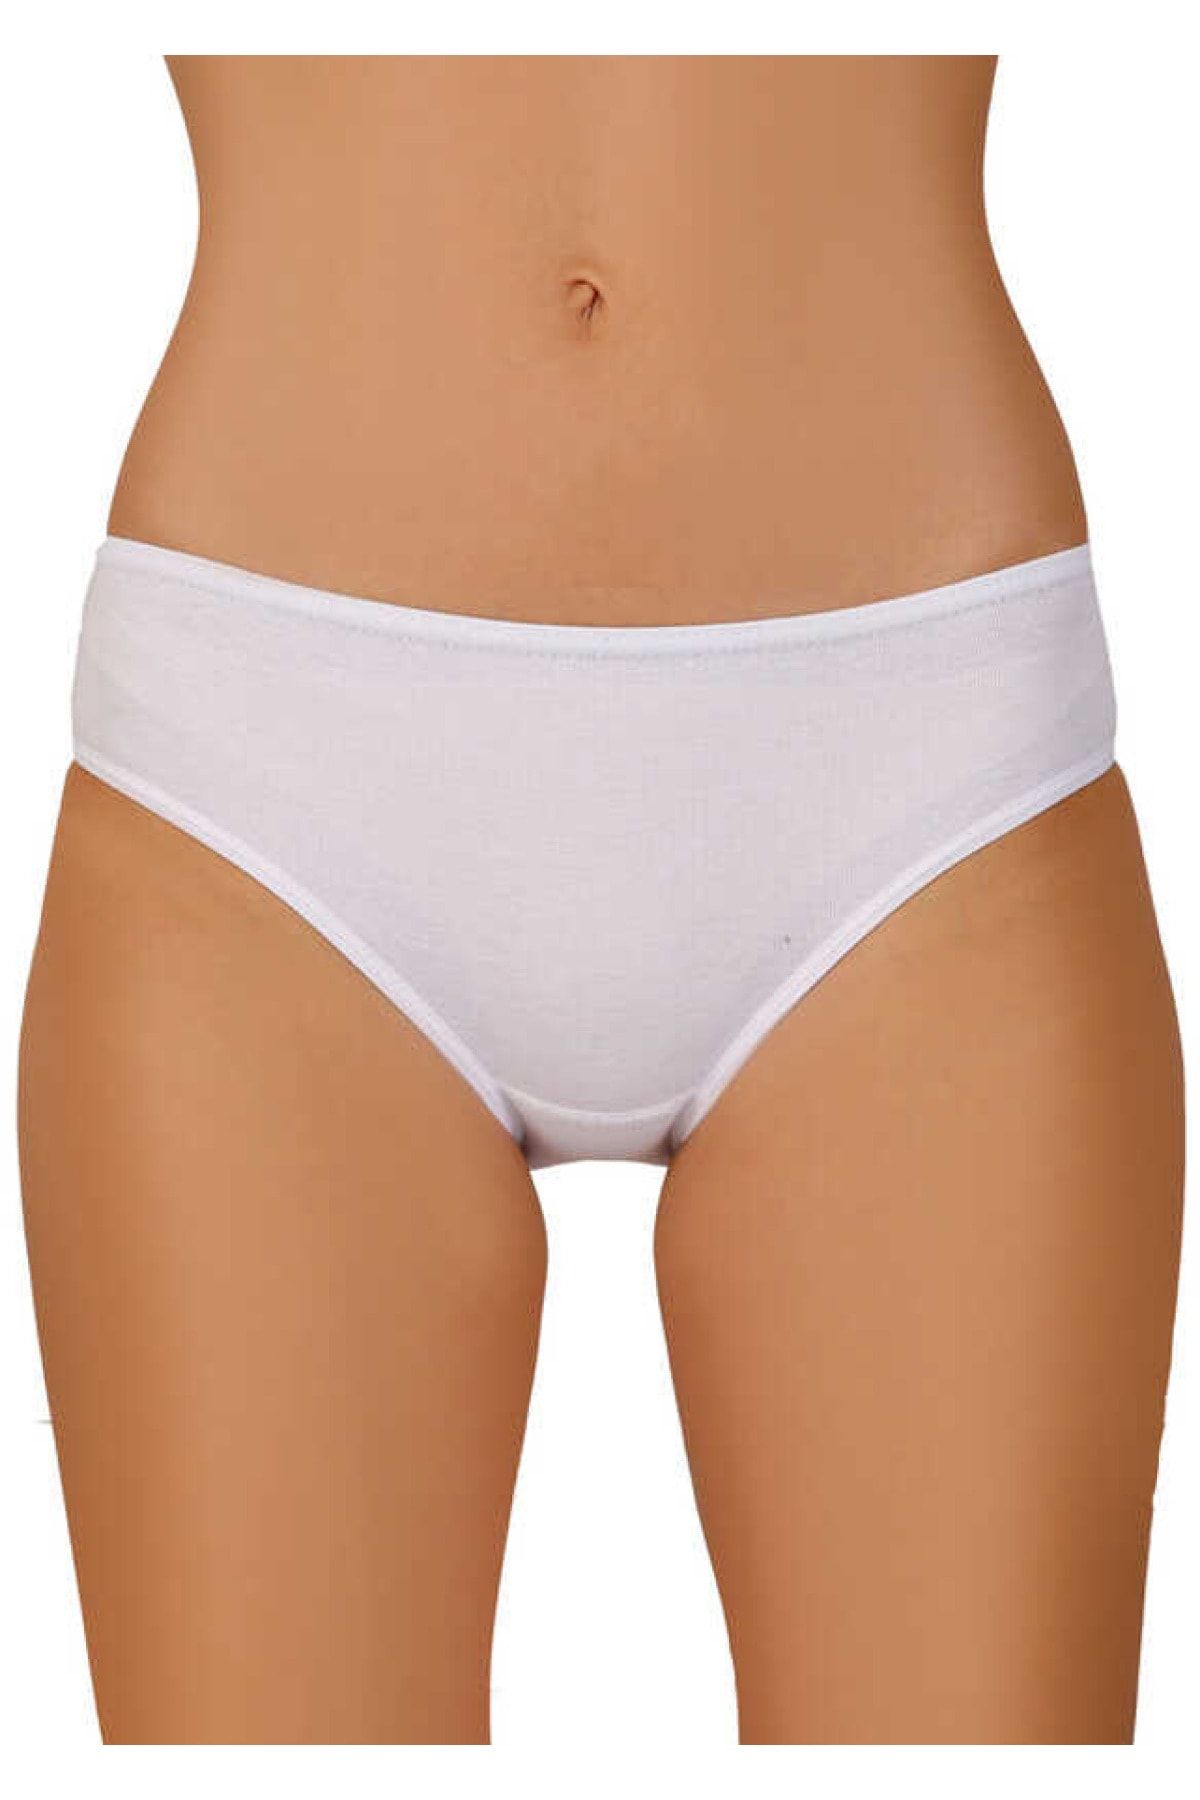 Women's Thong Underwear (20-Pk.)